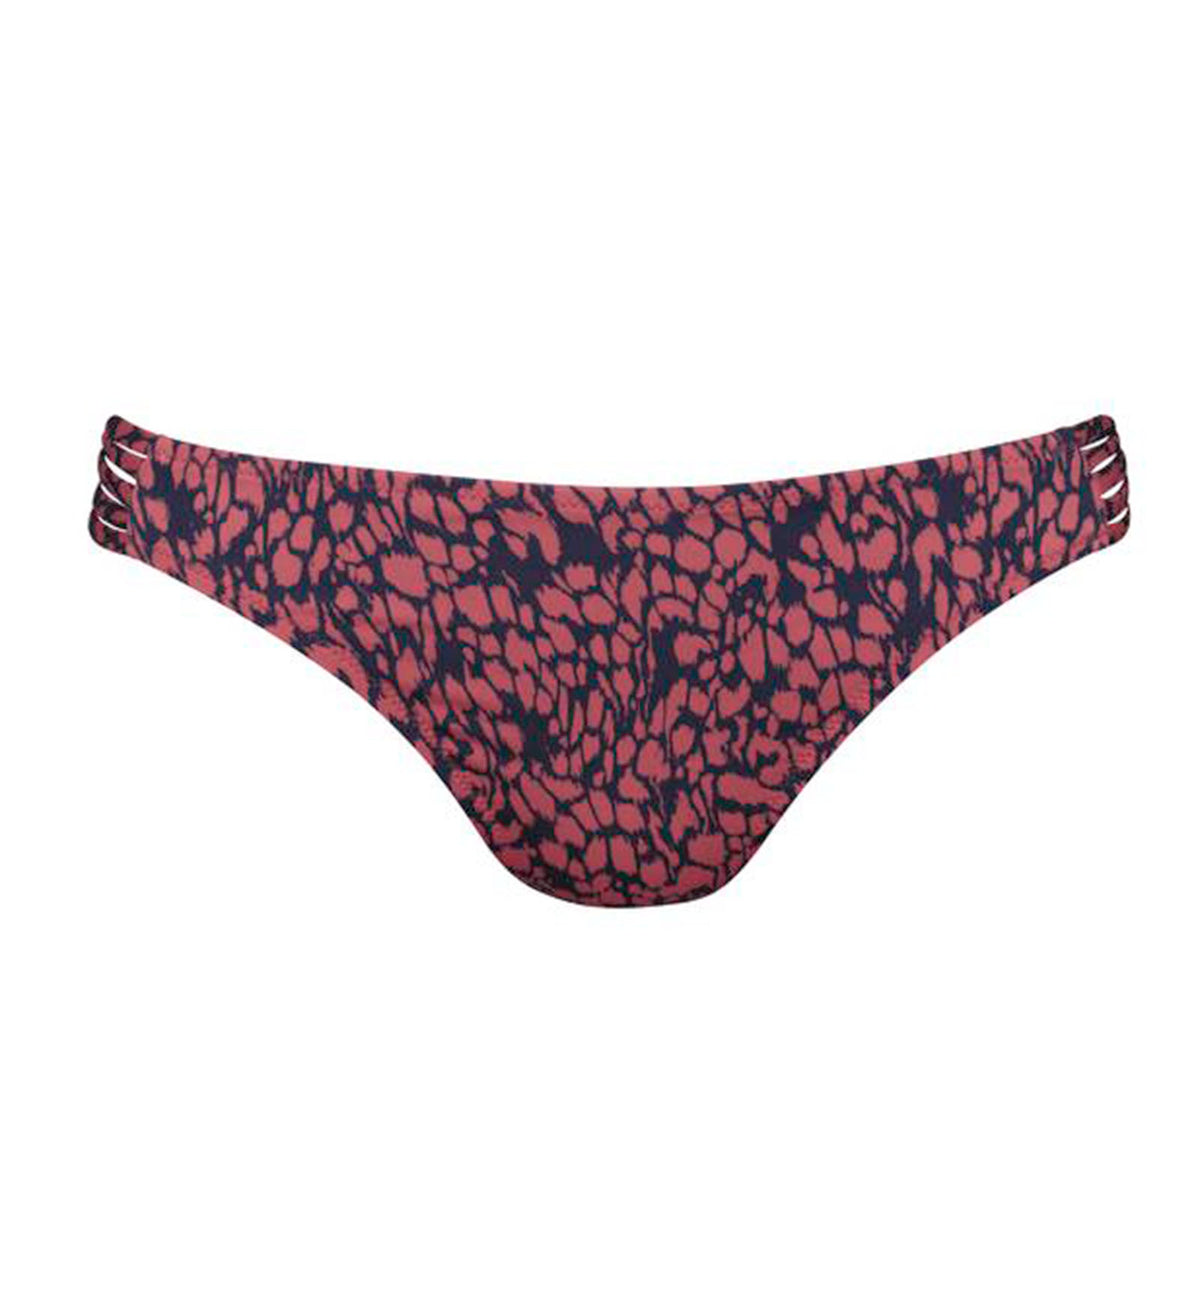 Anita Marble Beach Bree Bikini Swim Bottom (8799-0),Small,Rosewood - Rosewood,Small